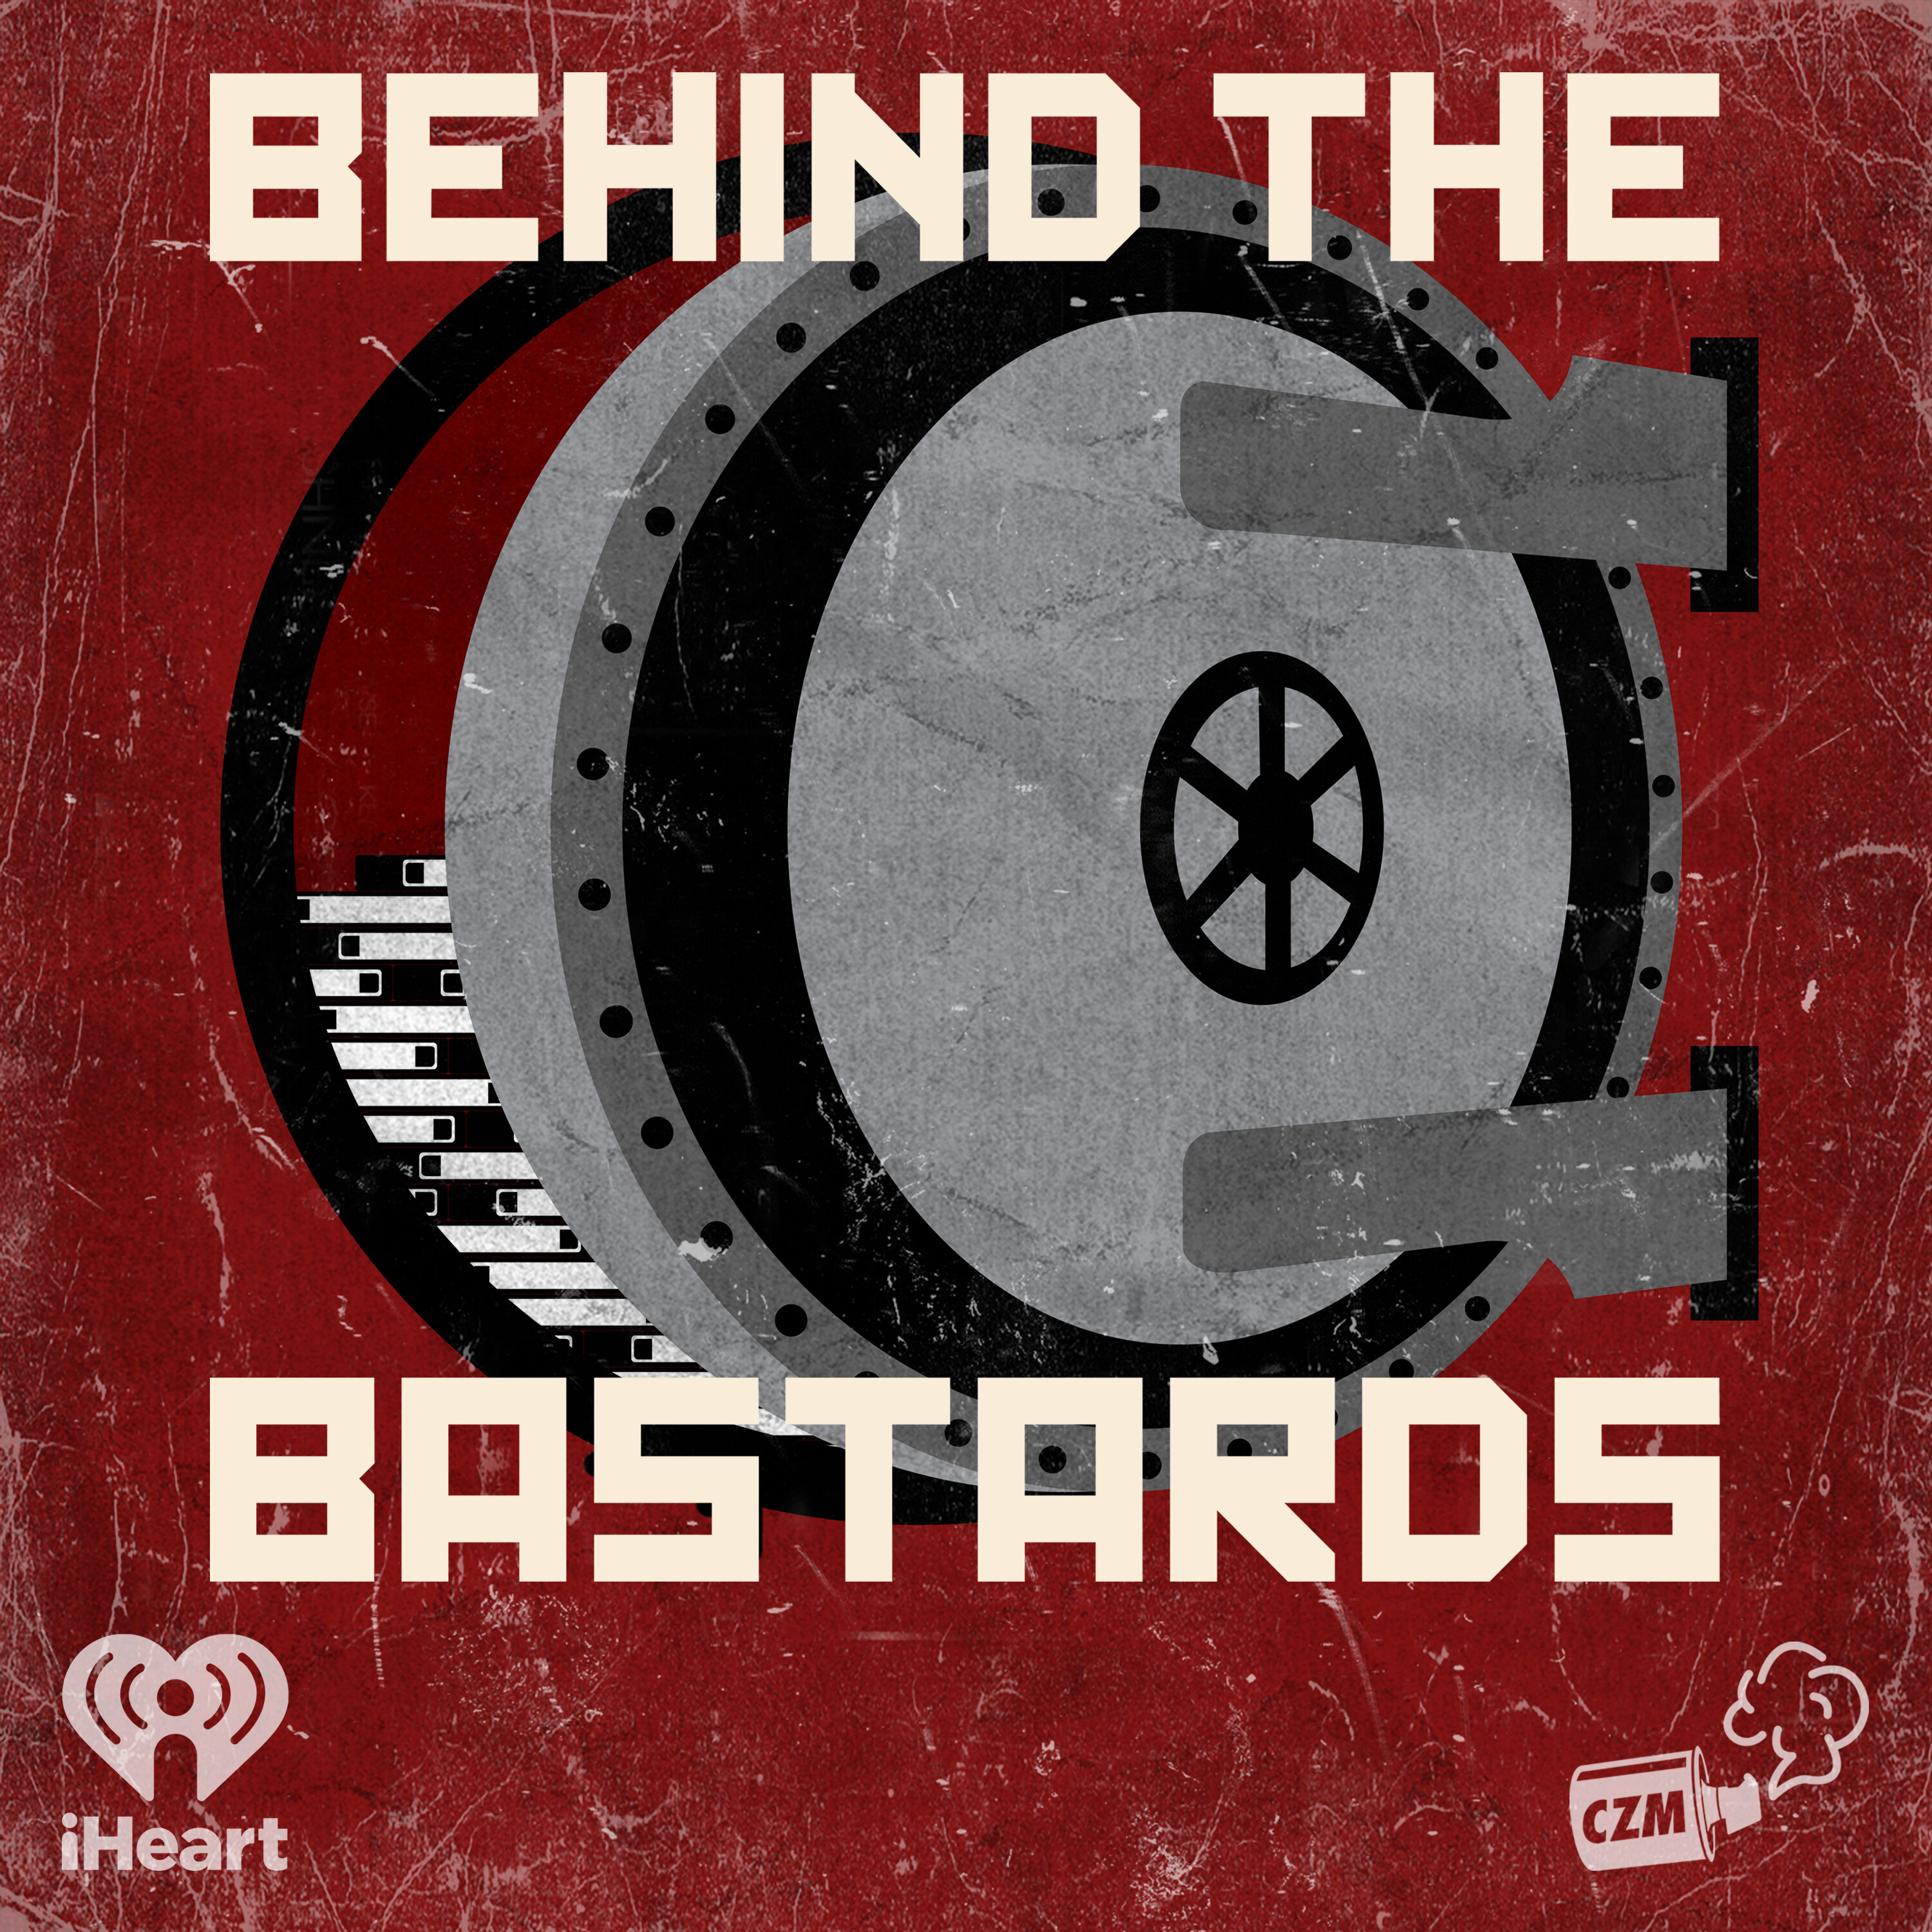 Behind the Bastards podcast